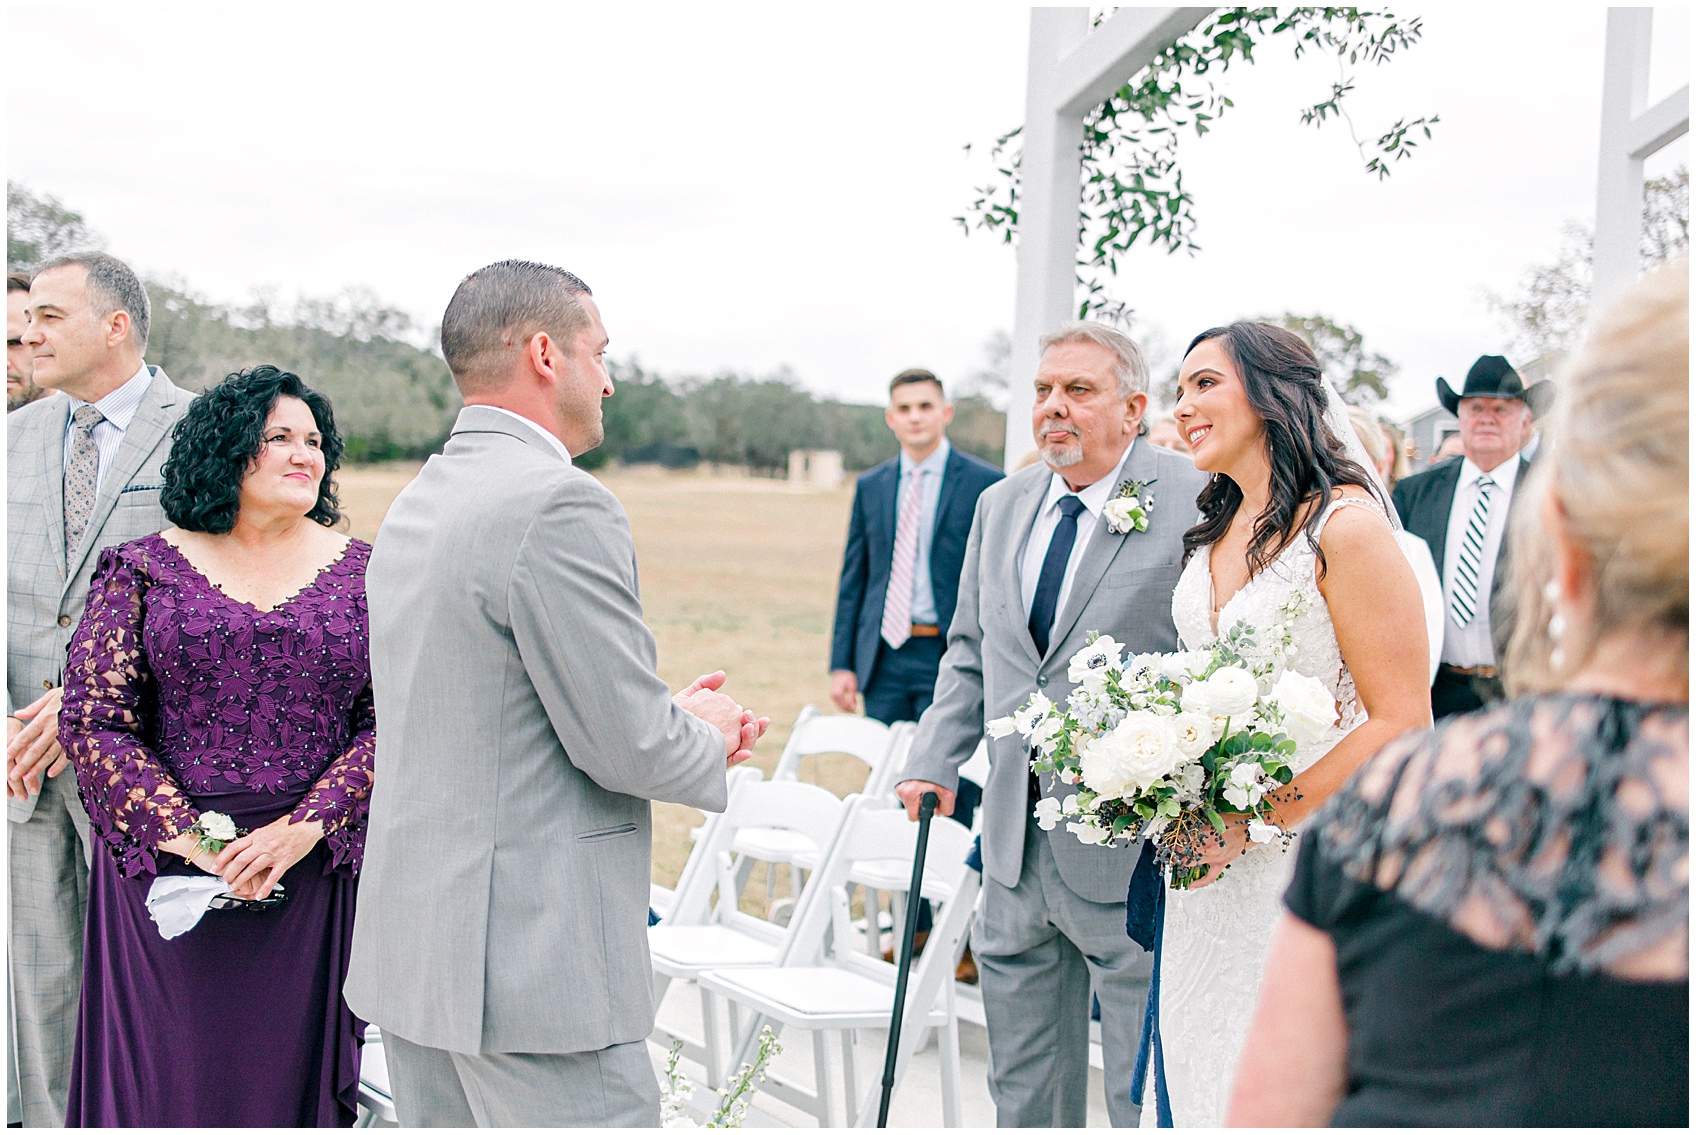 Swallows Eve wedding in Fredericksburg Texas by Allison Jeffers Photography 0027